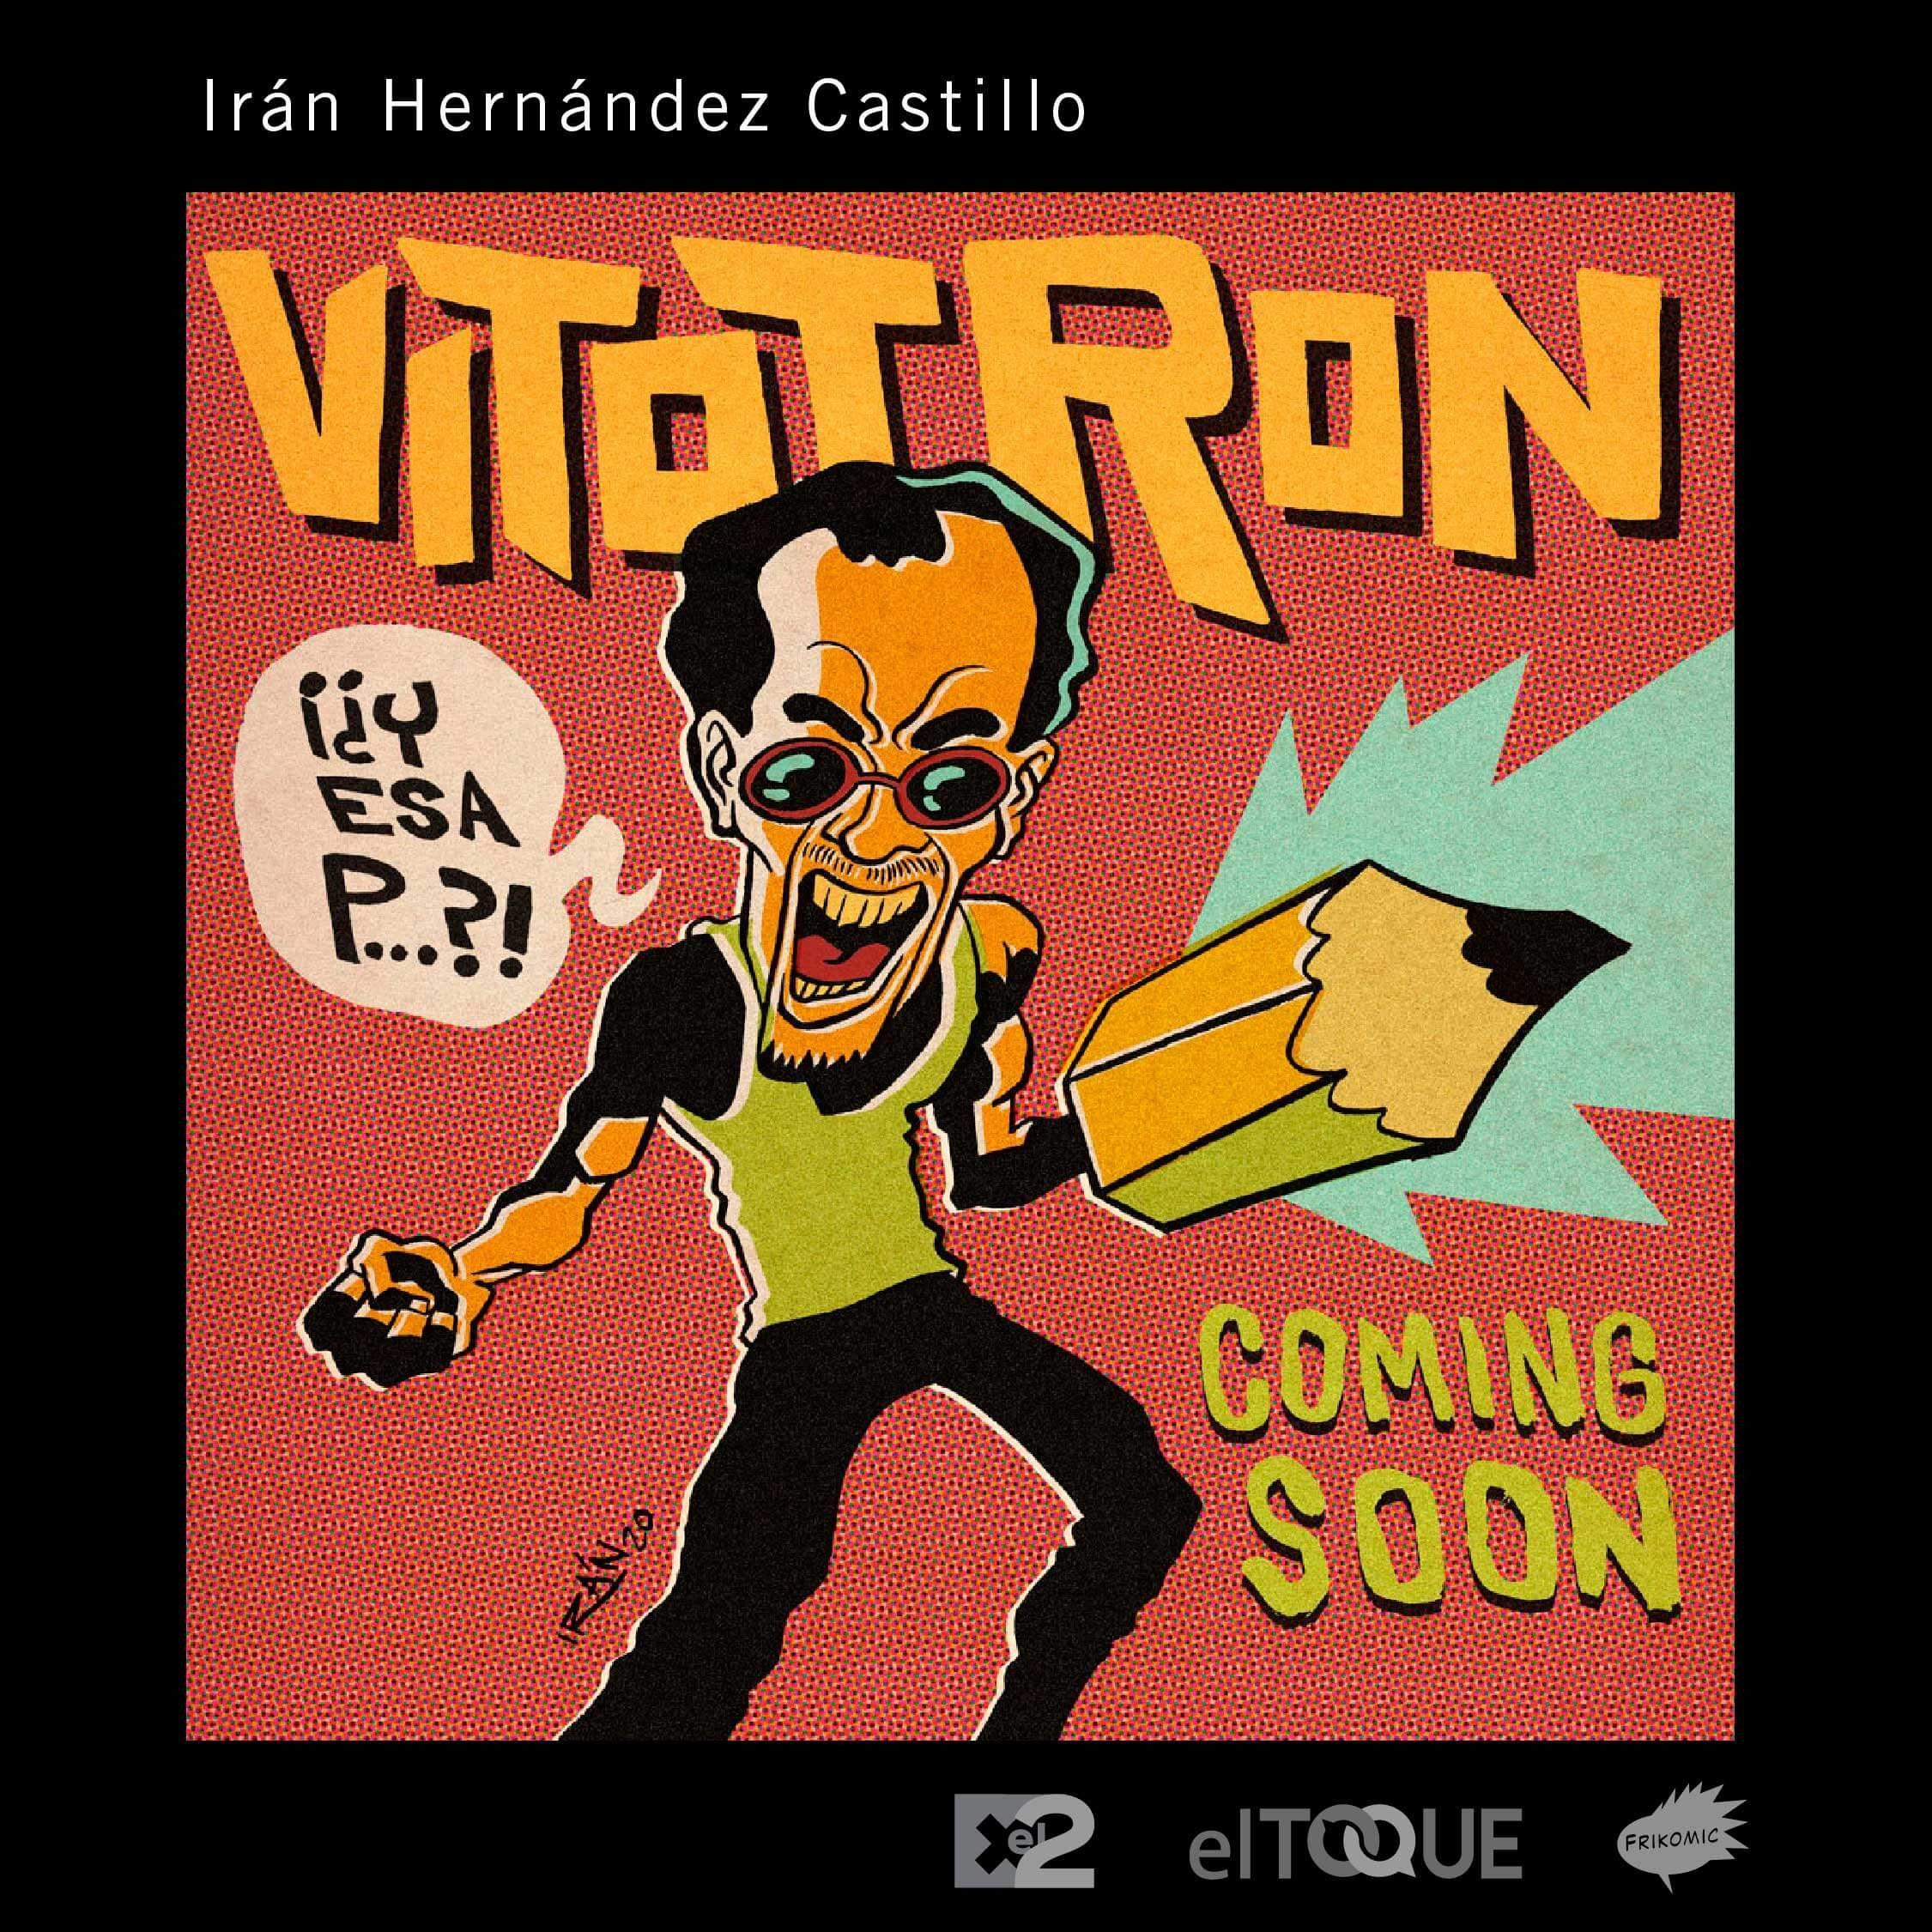 FUERZA-VITO-20-09-Hernandez-Iran-VICTOR-ALFONSO-YESAPIN-GARCIA-WILLY-FILLY-XEL2-HUMOR-GRAFICO-CUBA.jpg